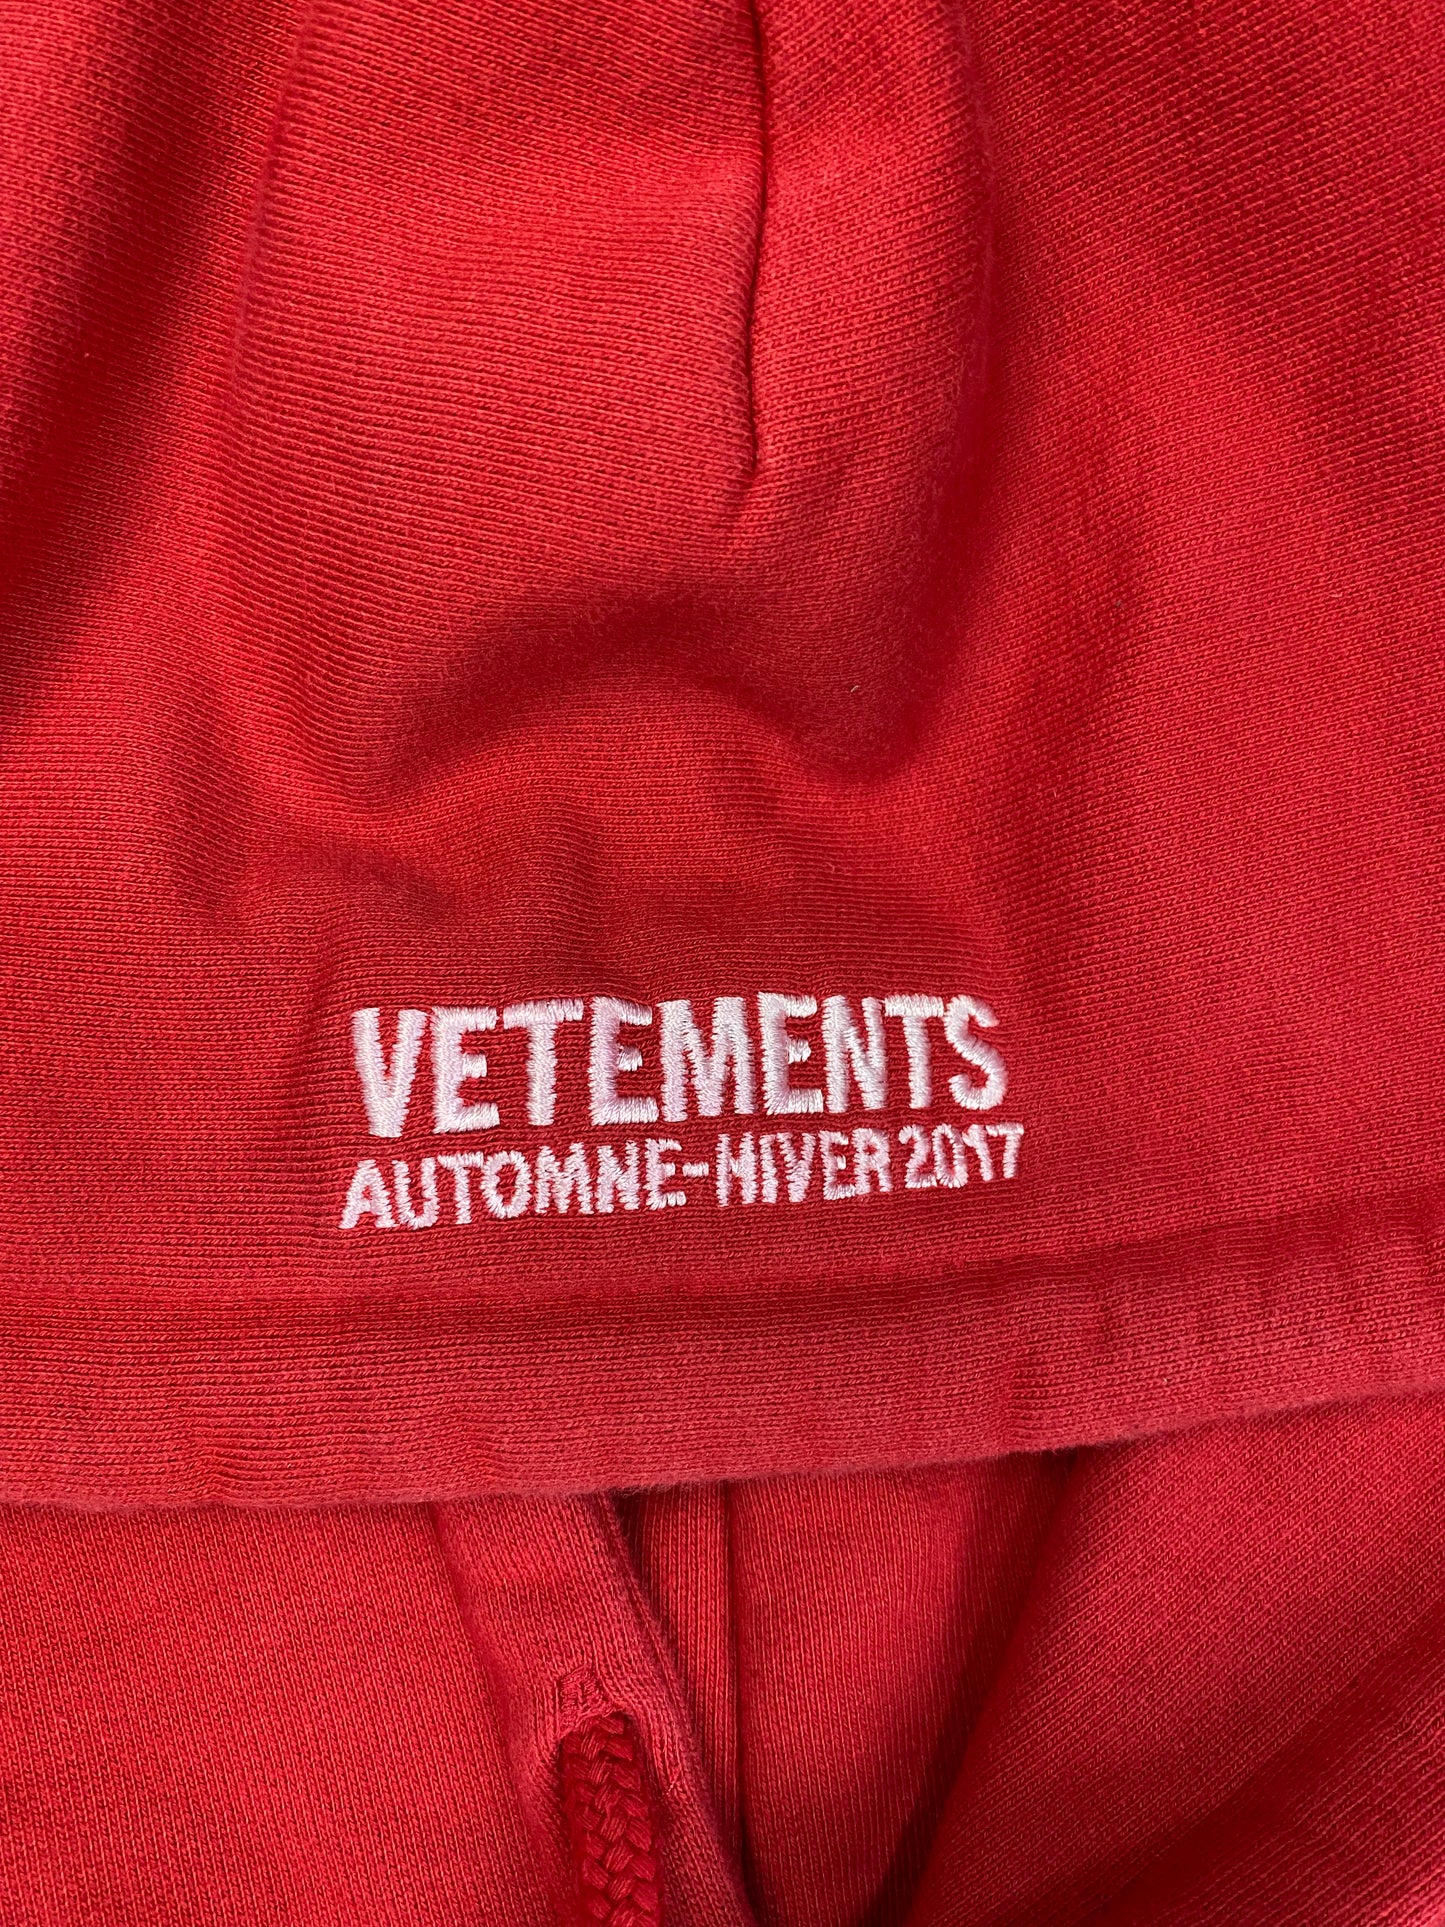 Vetements Seoul Exclusive oversized OG METAL hoodie in red SZ:XS|M